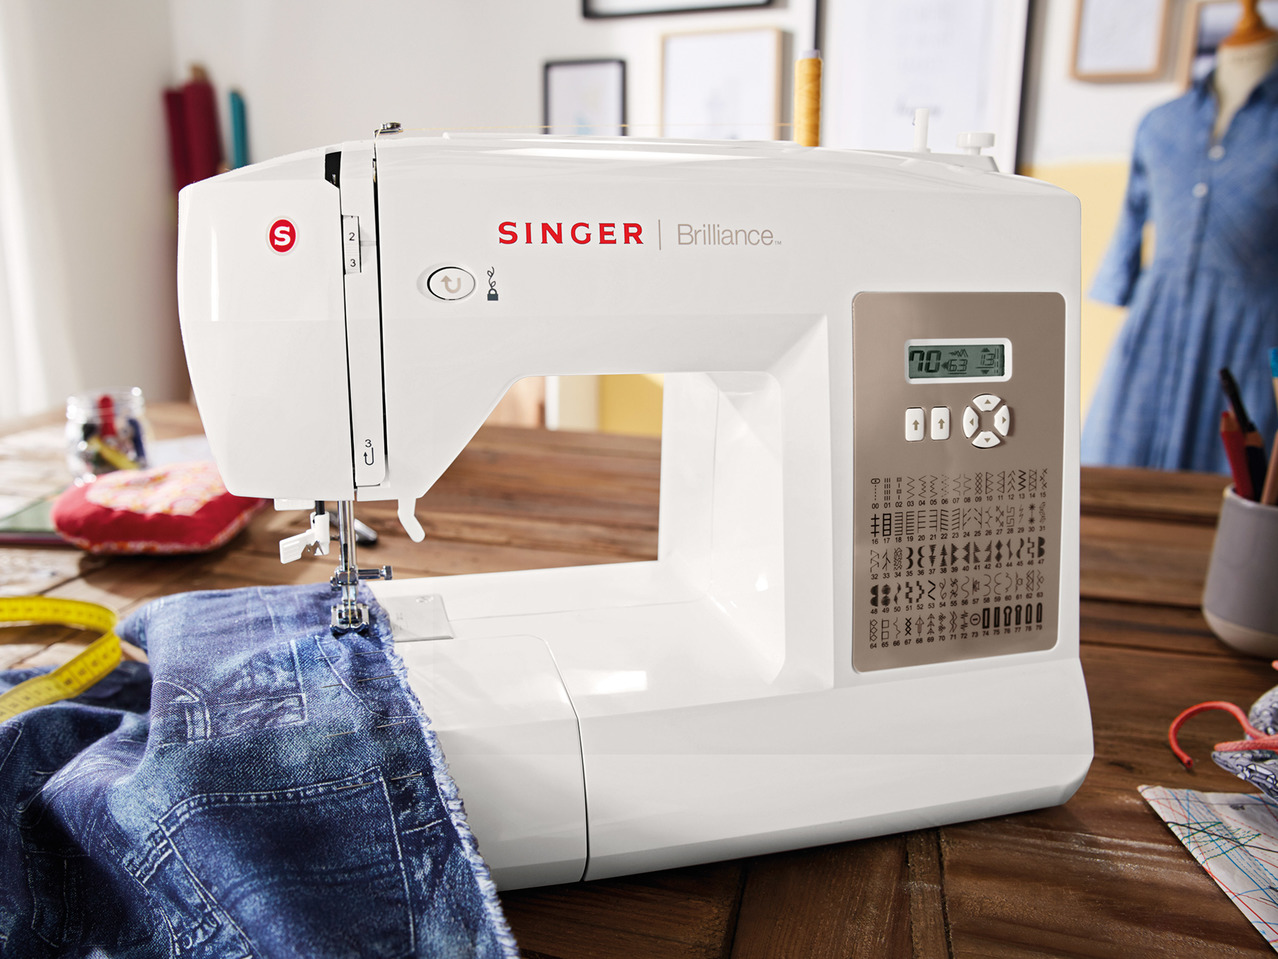 Singer Brilliance™ Sewing Machine1 Lidl — Great Britain Specials